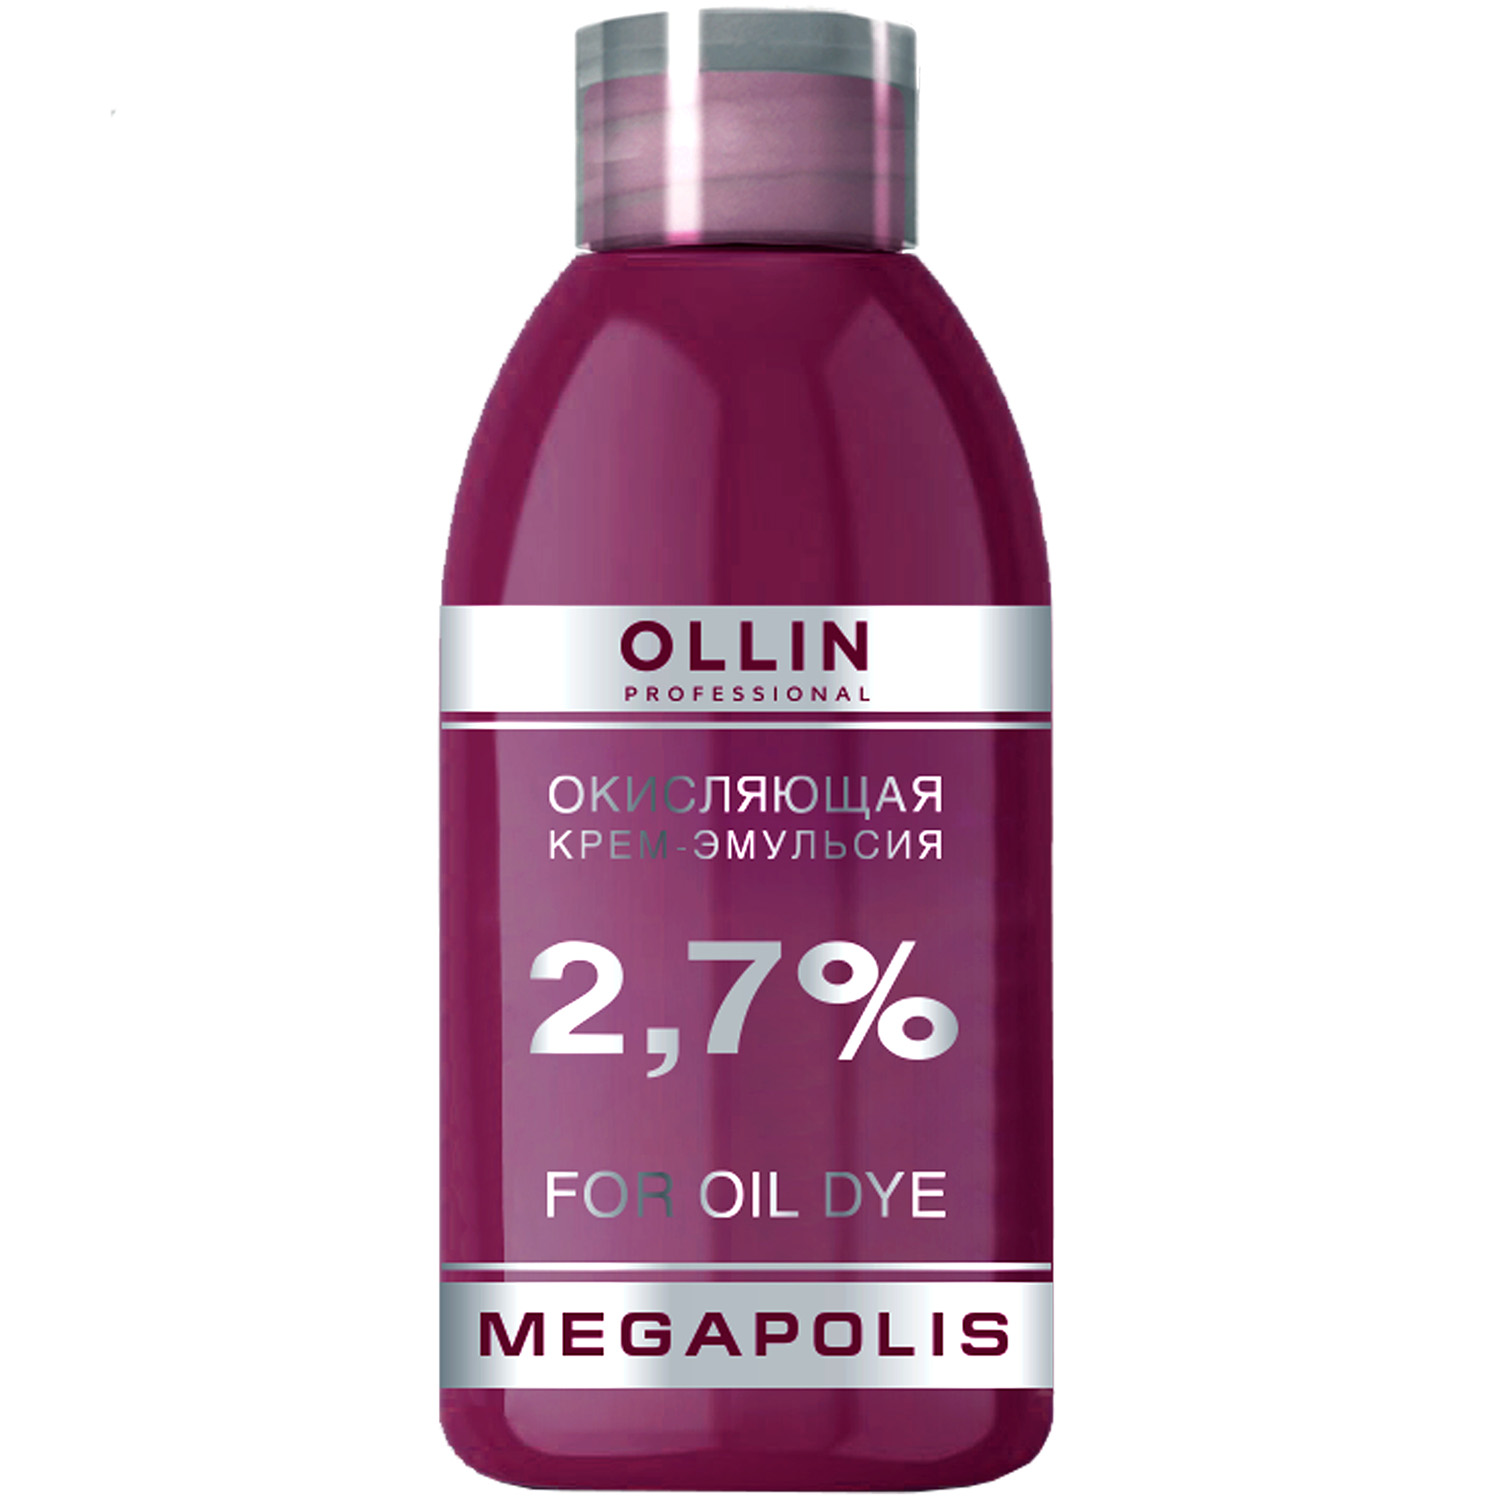 Ollin Professional Окисляющая крем-эмульсия 2,7%, 75 мл (Ollin Professional, Megapolis) окисляющая крем эмульсия 2 7% ollin professional megapolis 75 мл